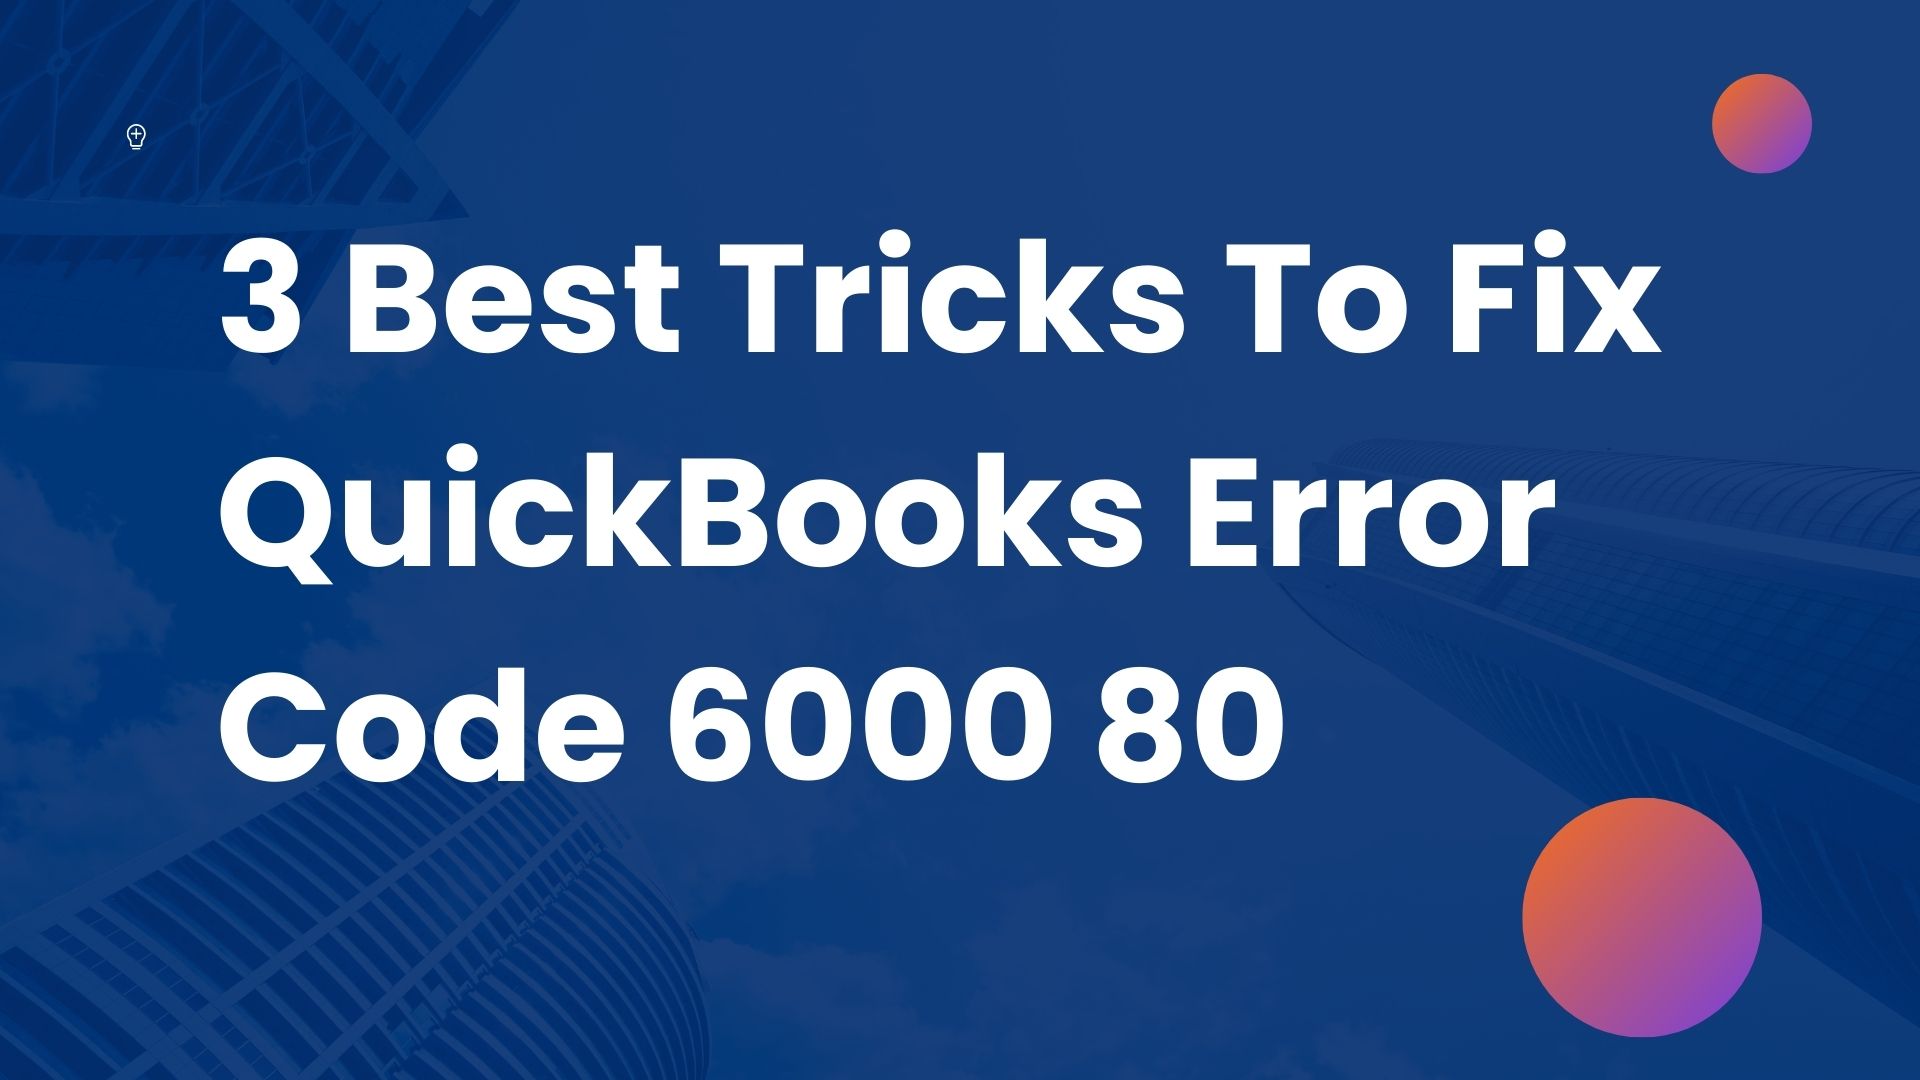 3 Best Tricks To Fix QuickBooks Error Code 6000 80